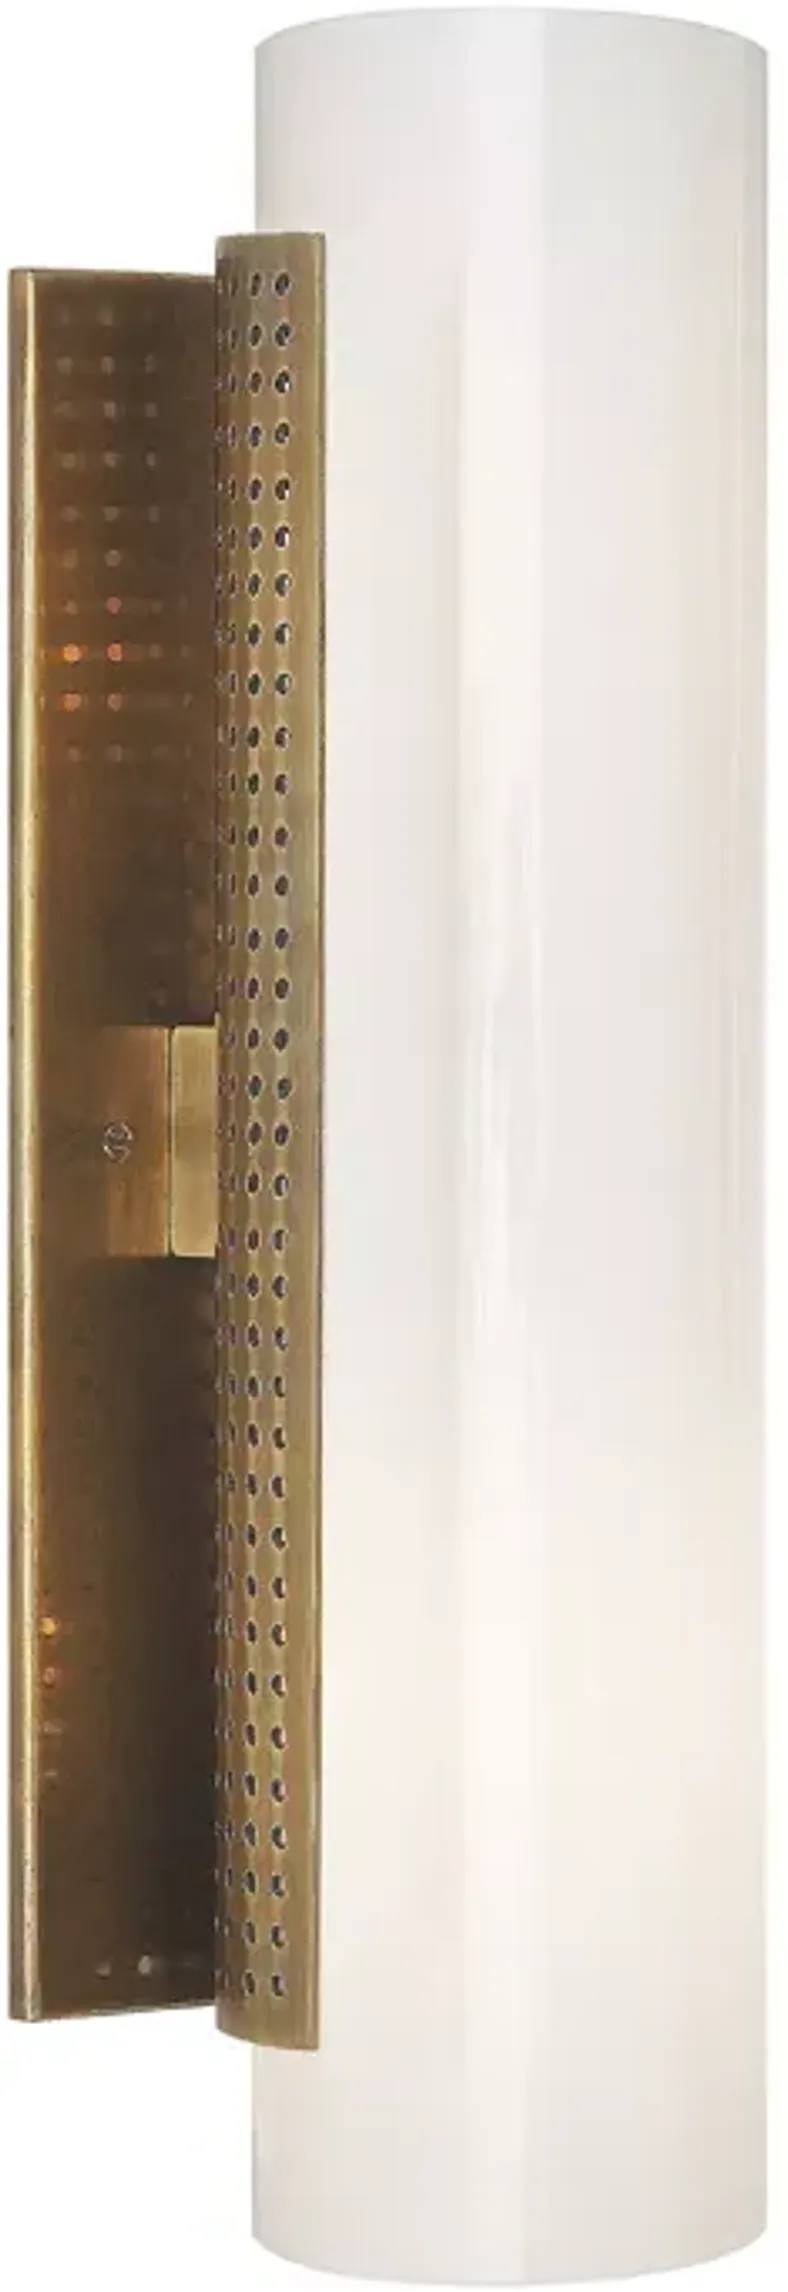 Kelly Wearstler Precision Cylinder Sconce